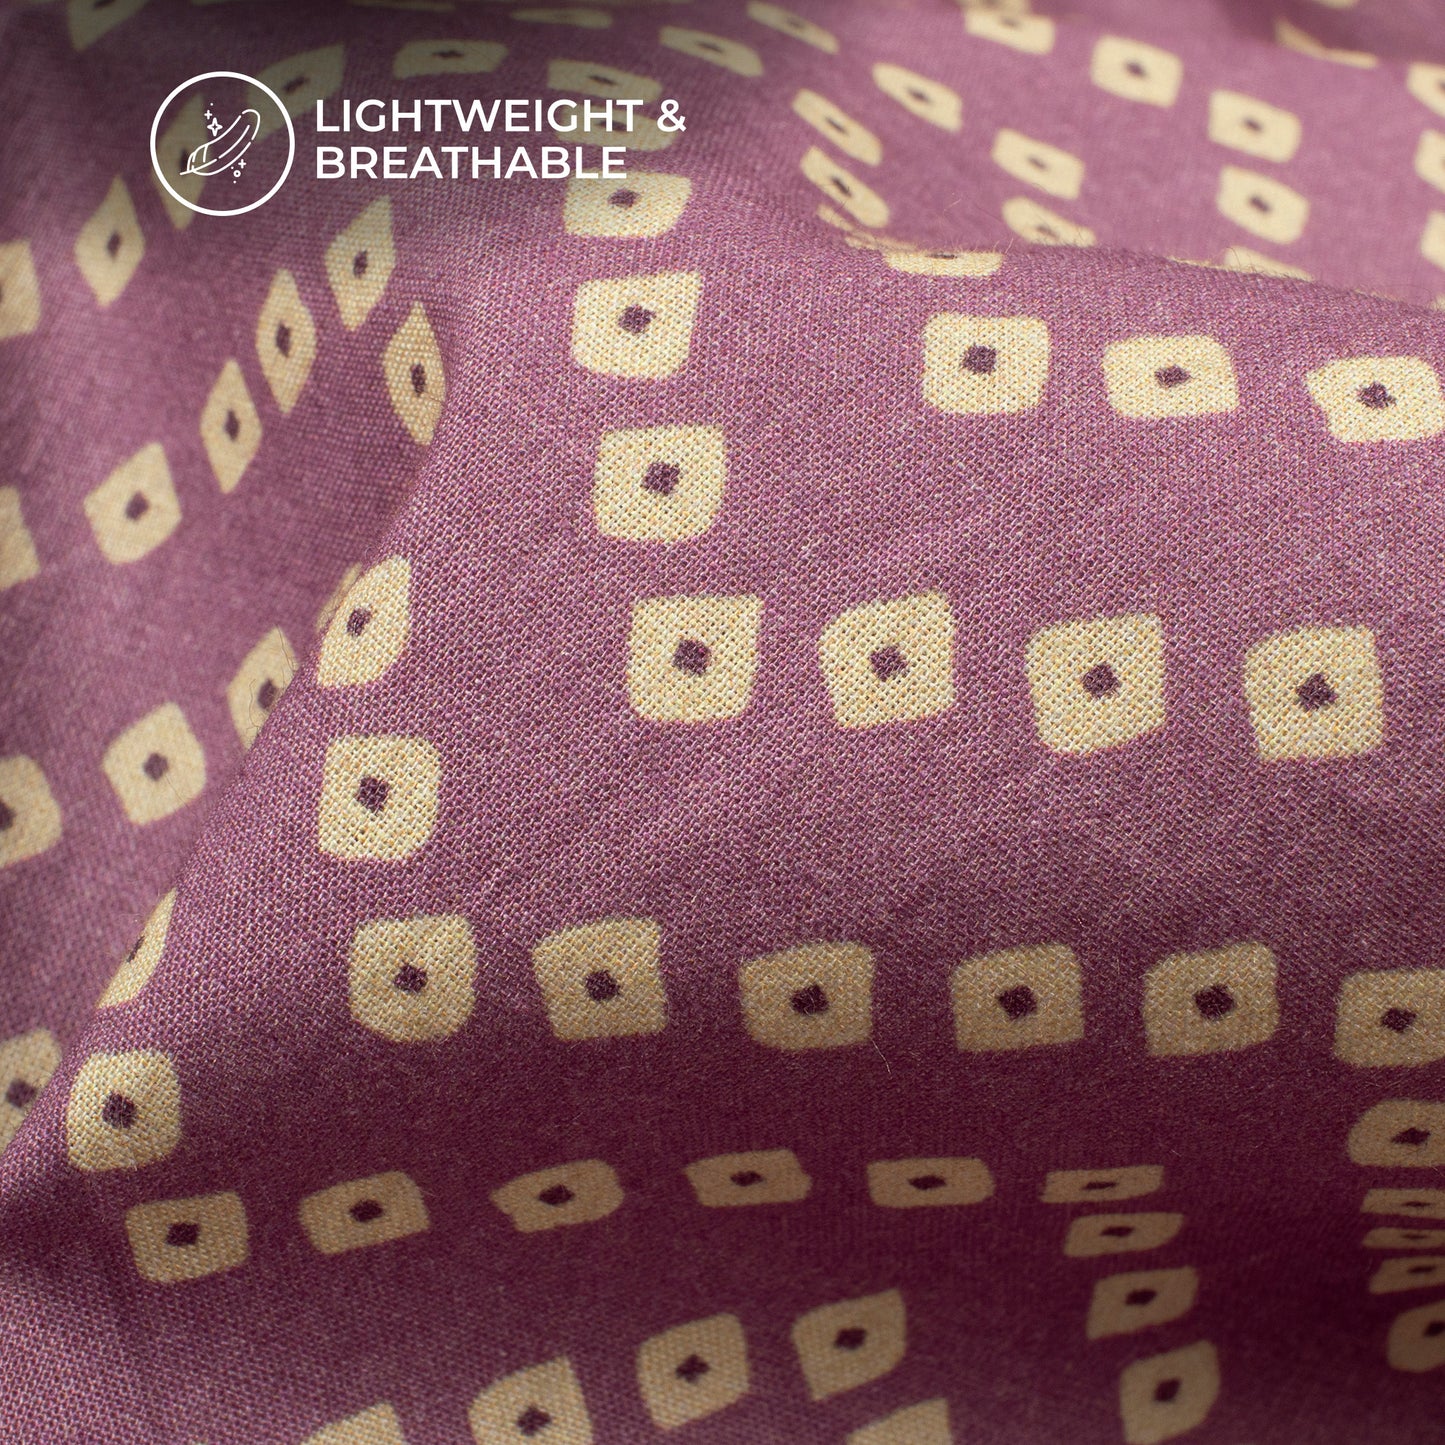 Periwinkle Purple Bandhani Digital Print Cotton Cambric Fabric